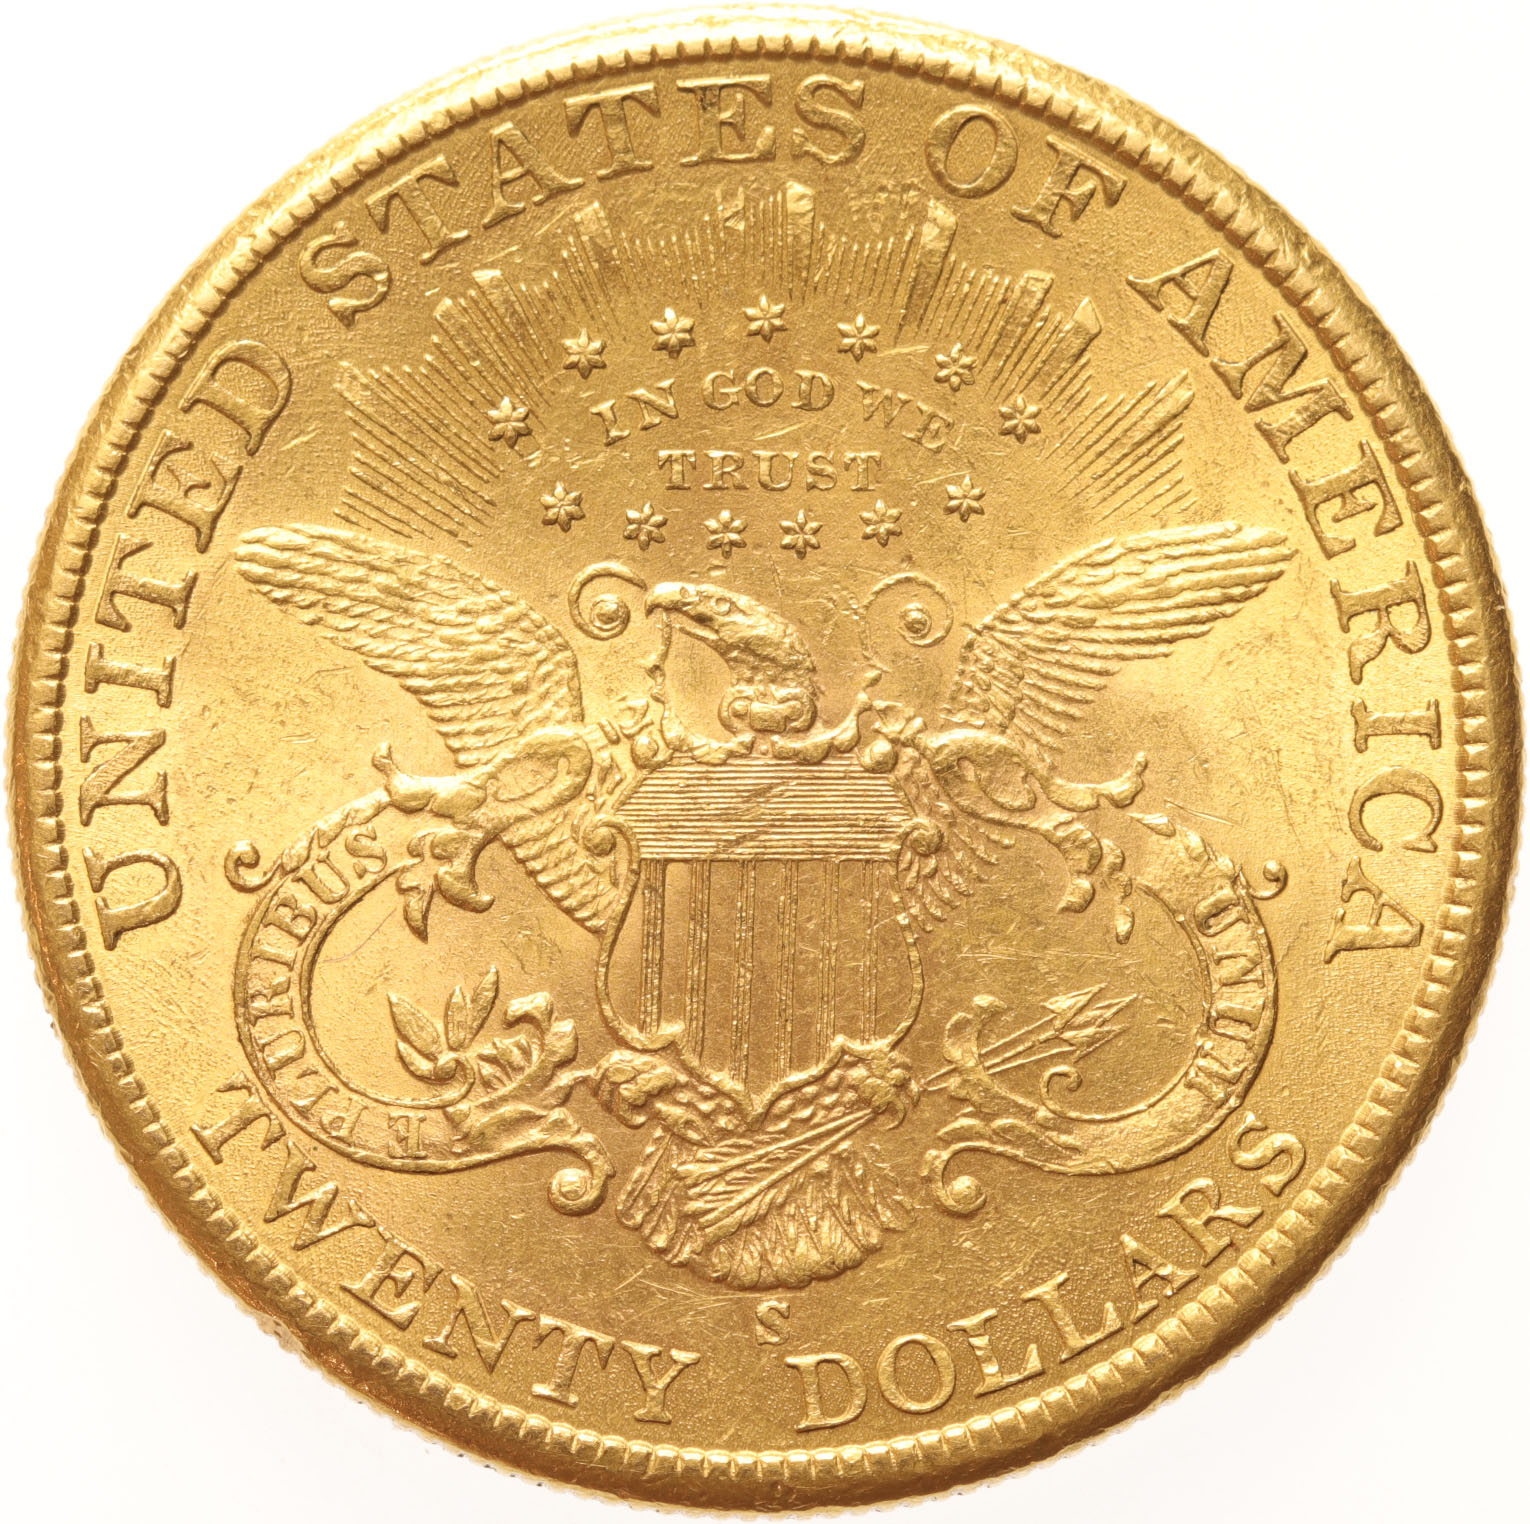 USA 20 Dollars 1900s